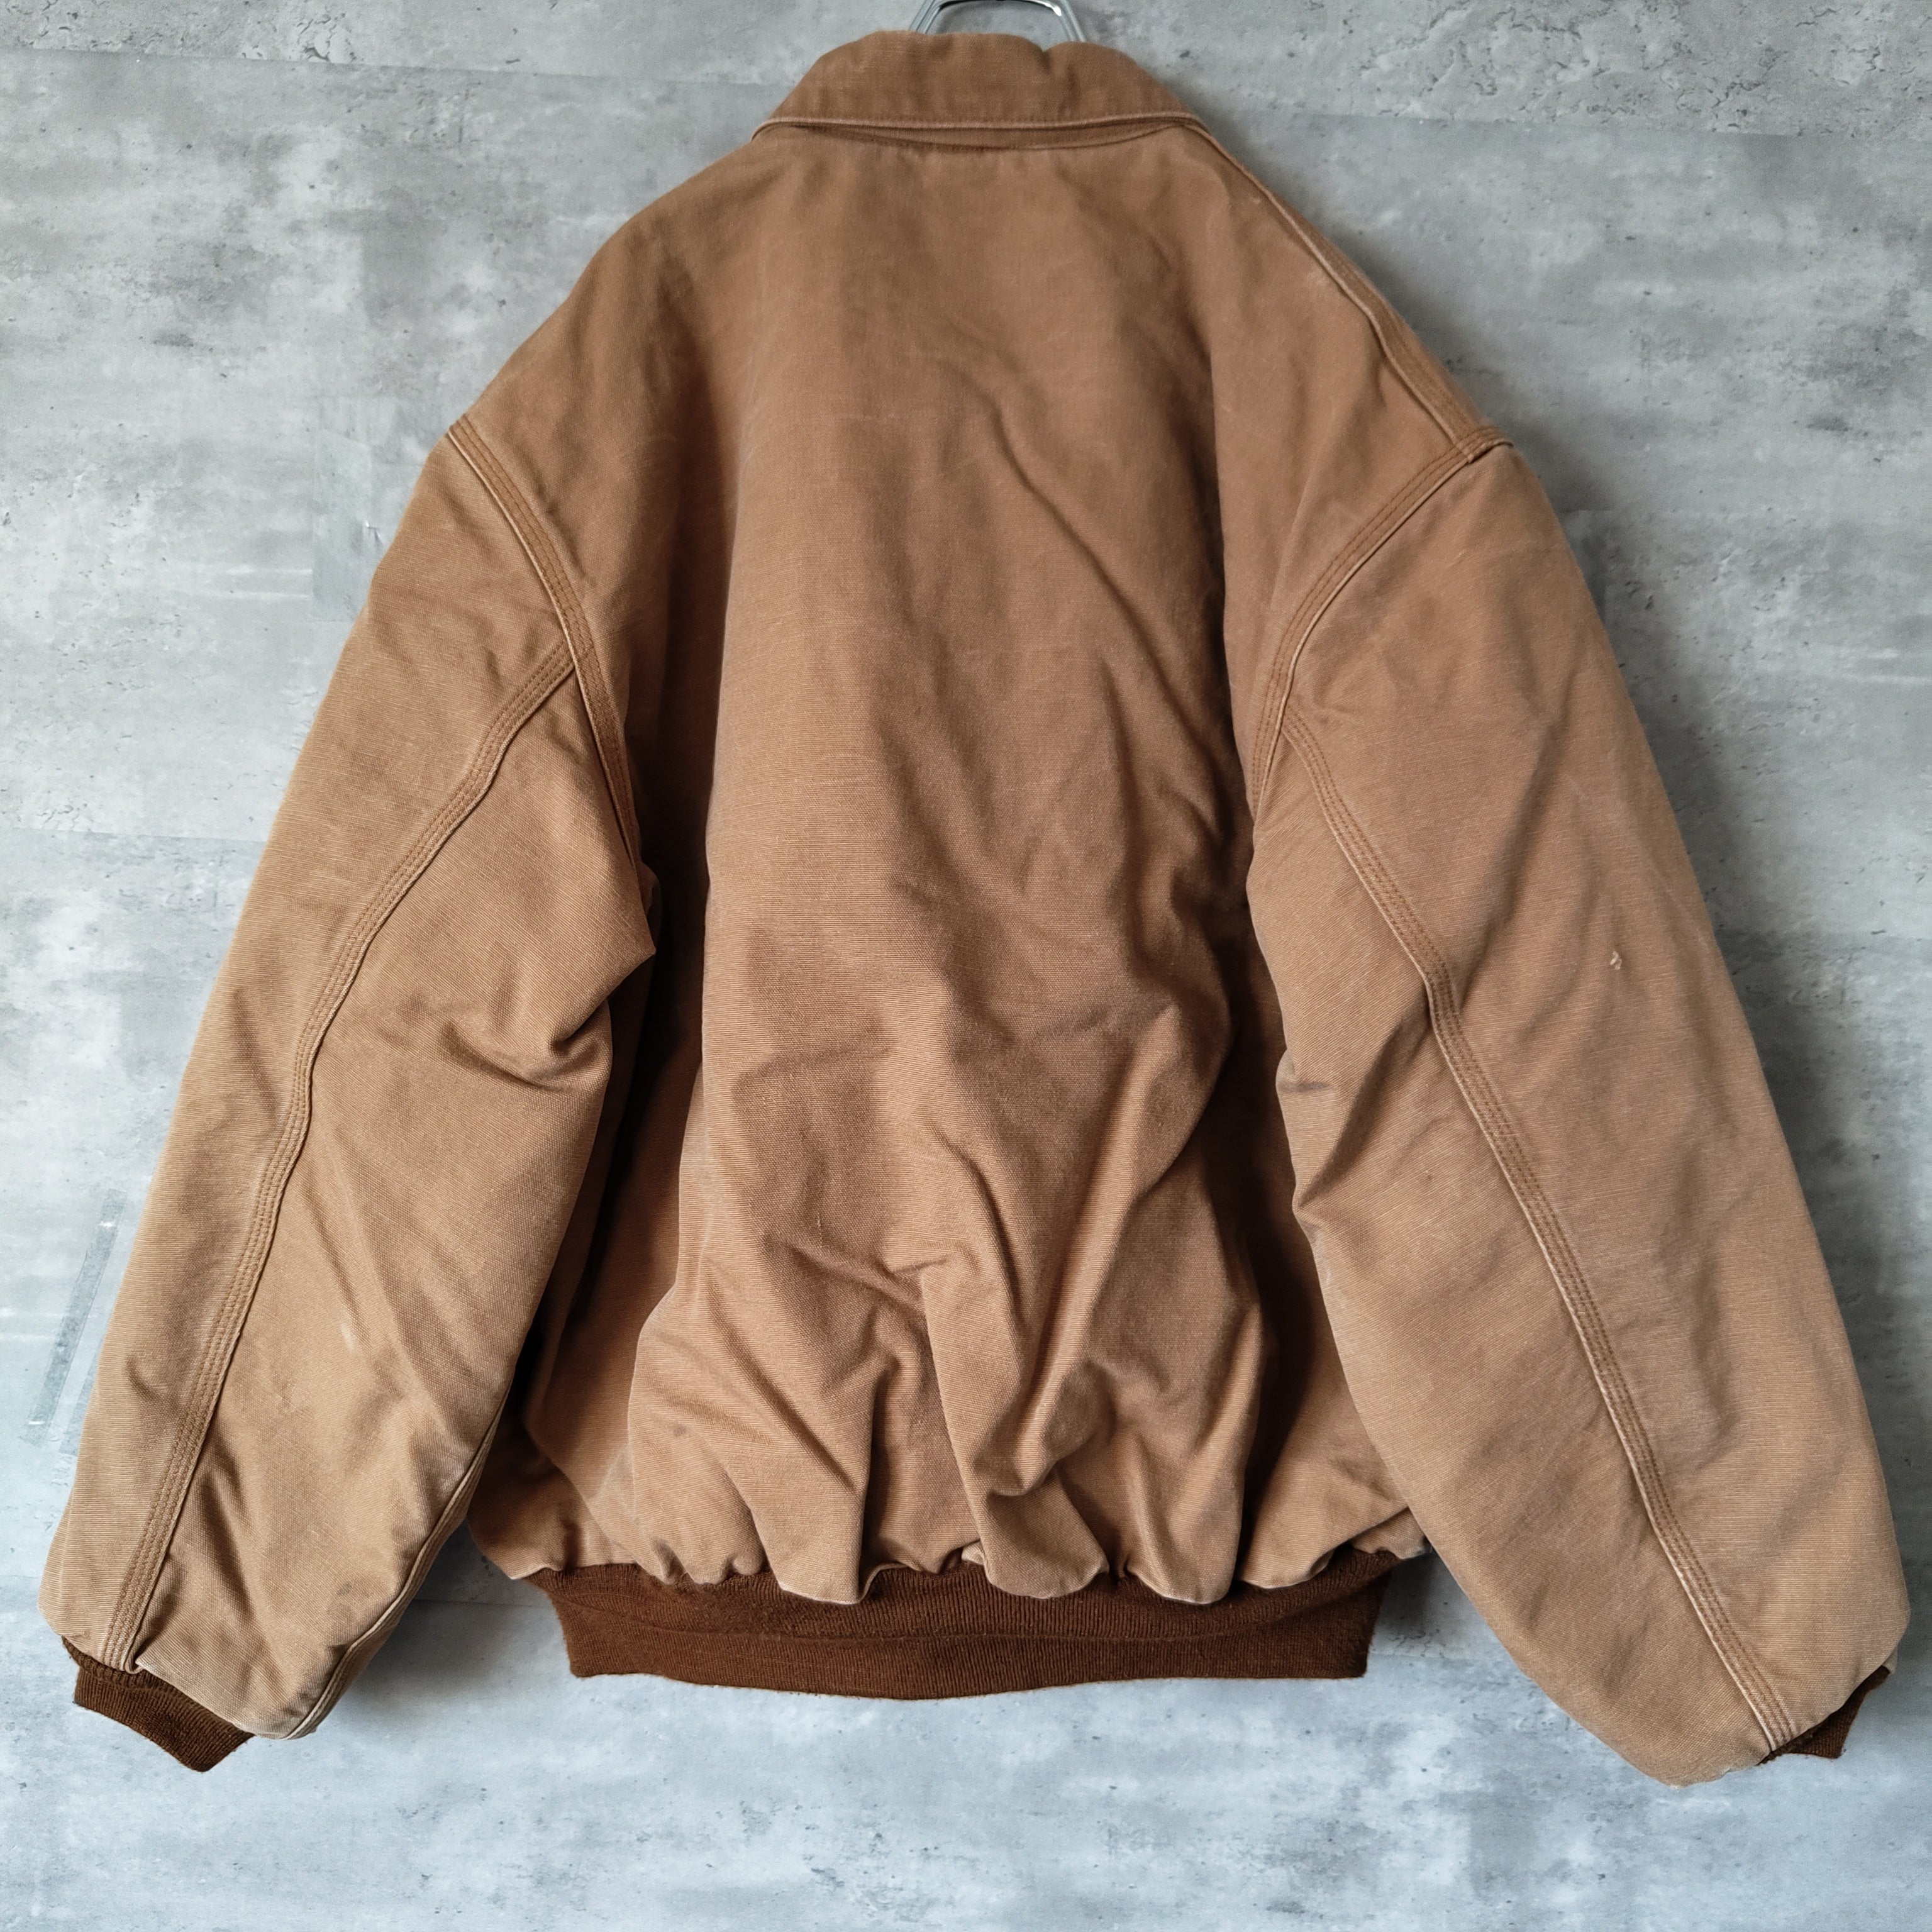 [Carhartt] UFCW duck jacket, made in U.S.A